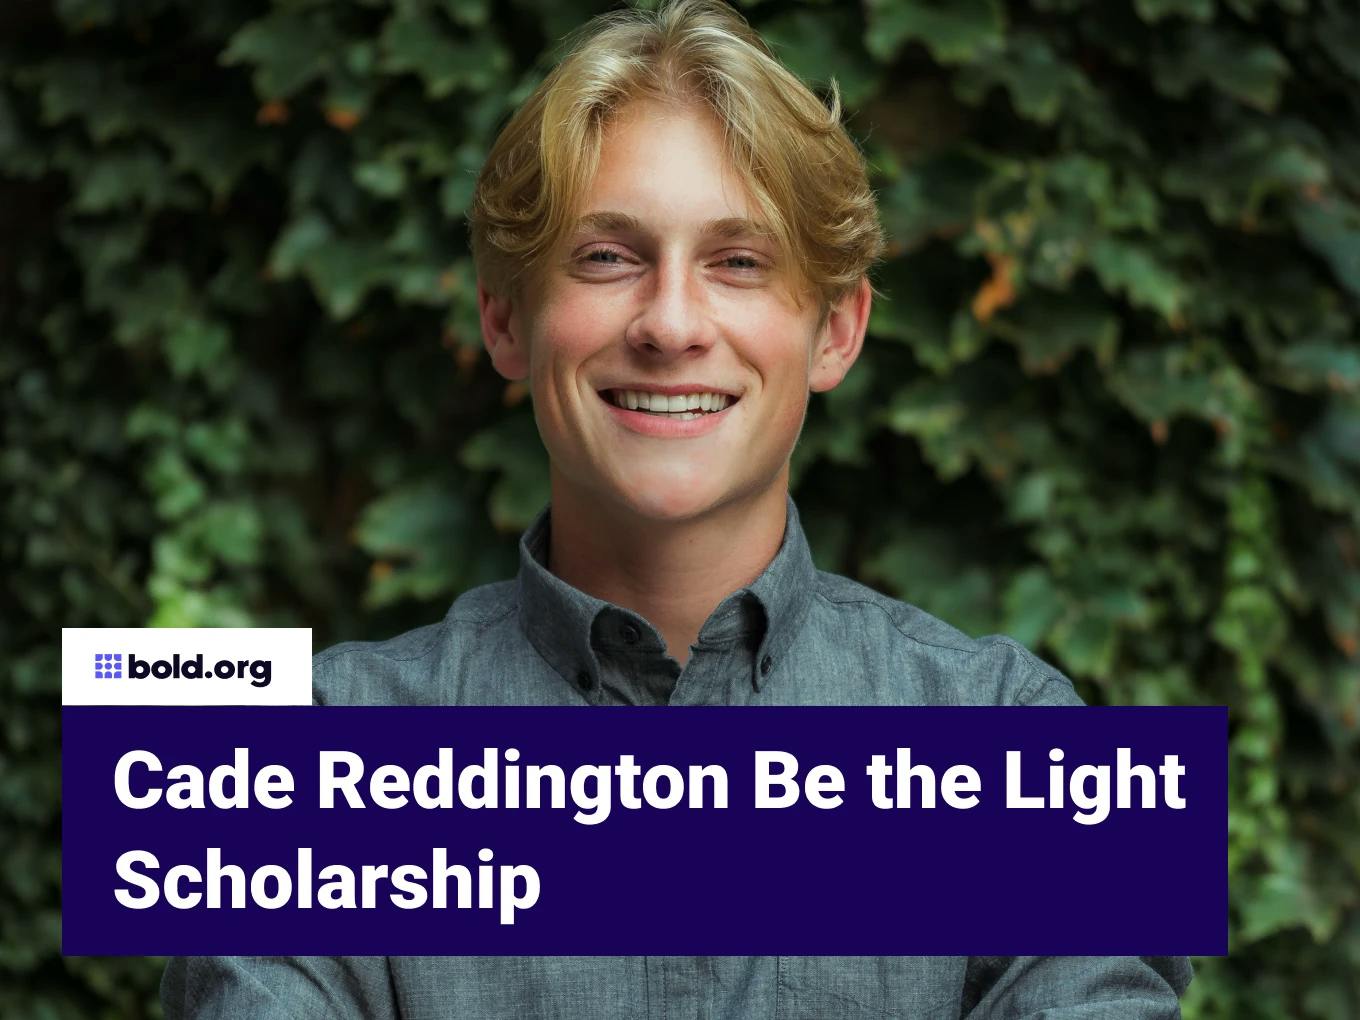 Cade Reddington Be the Light Scholarship